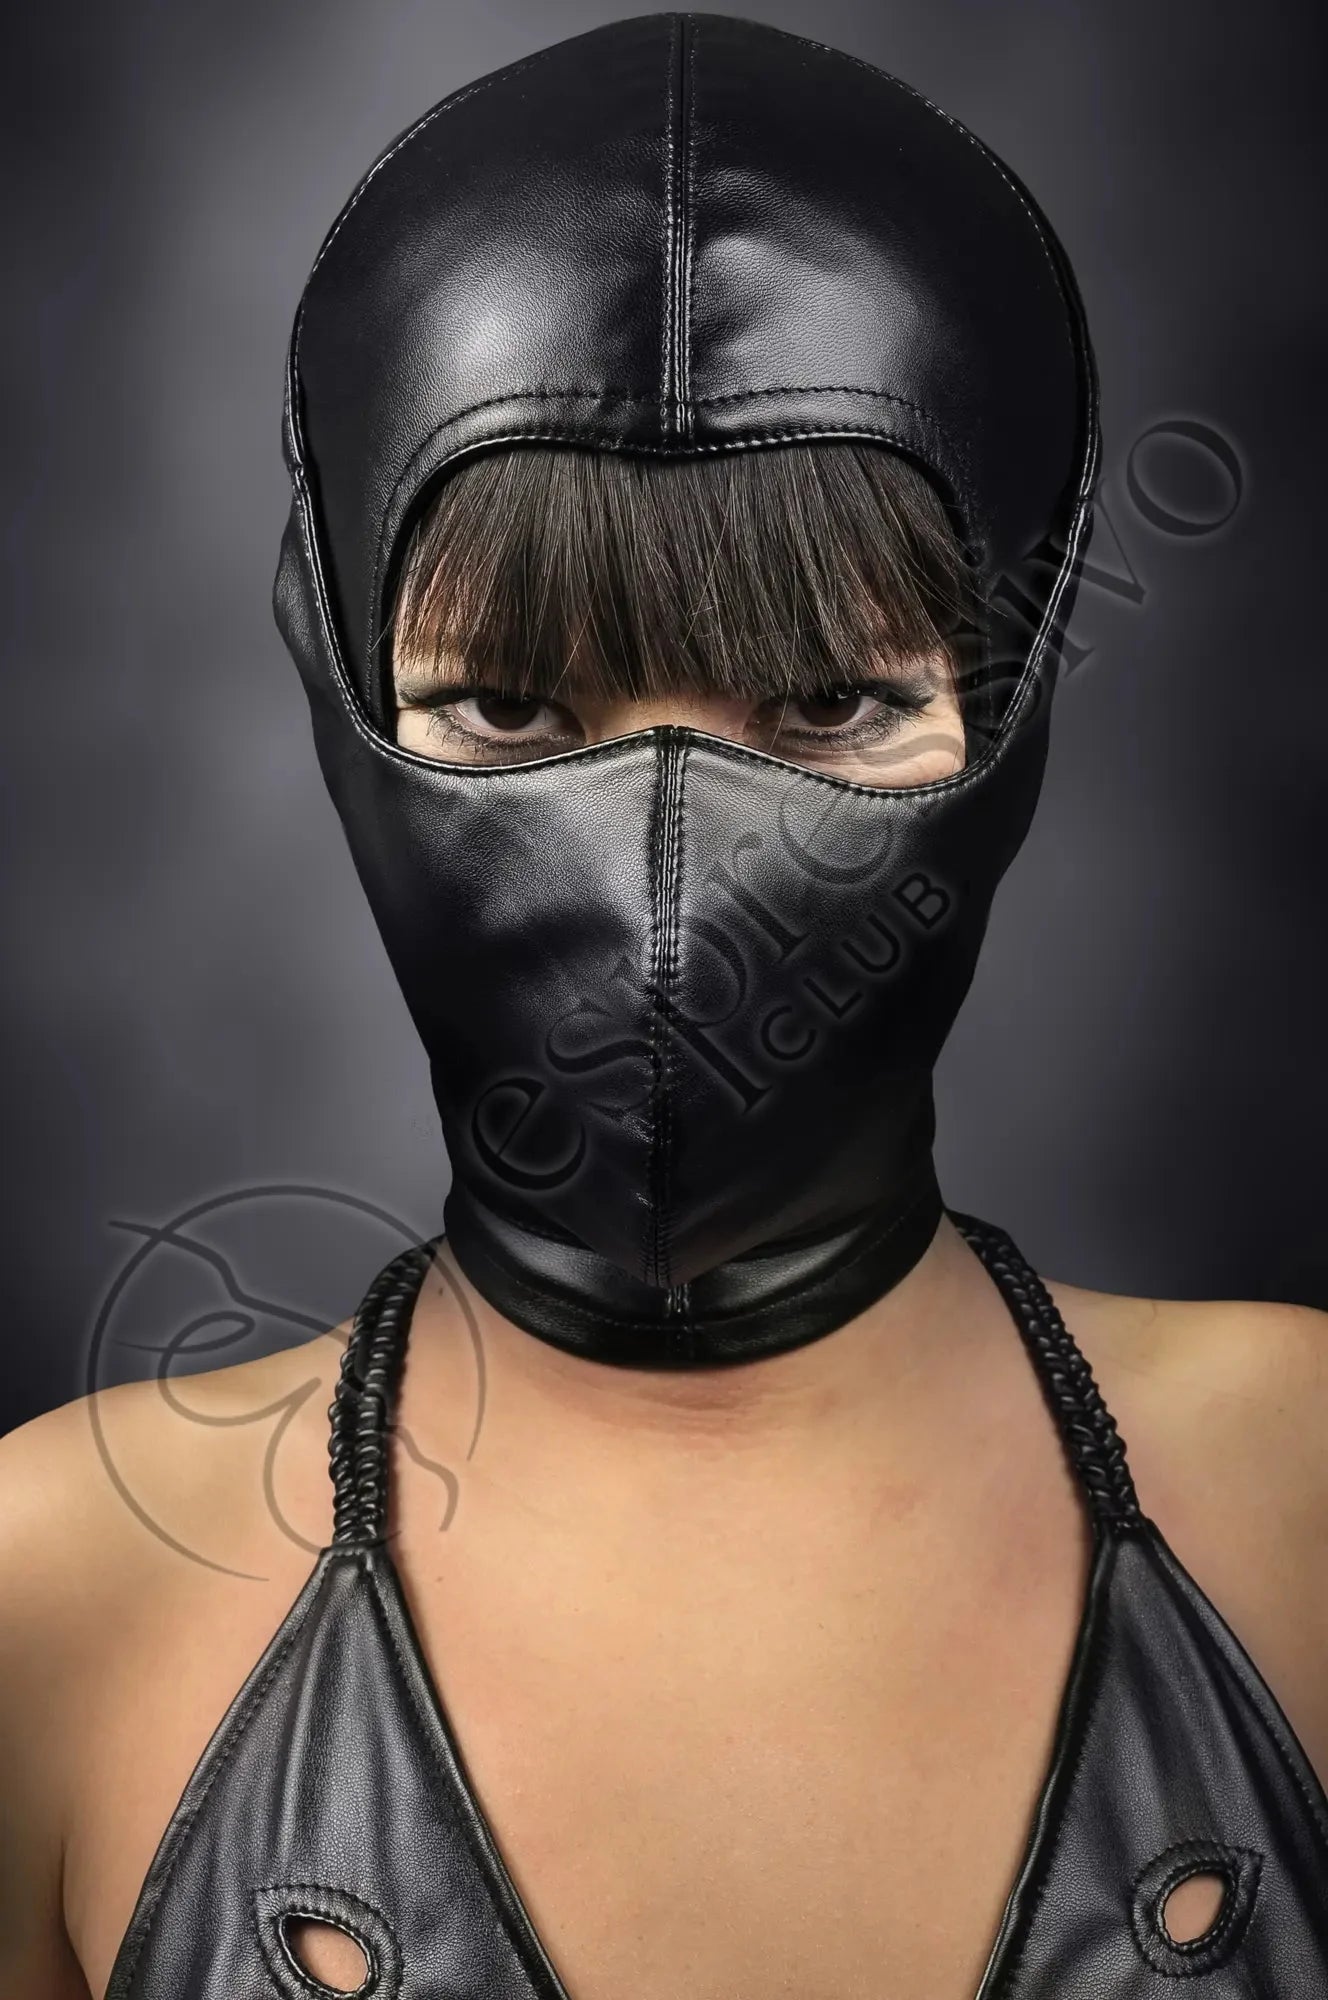 Bondage set of Open face BDSM hood + leather face mask